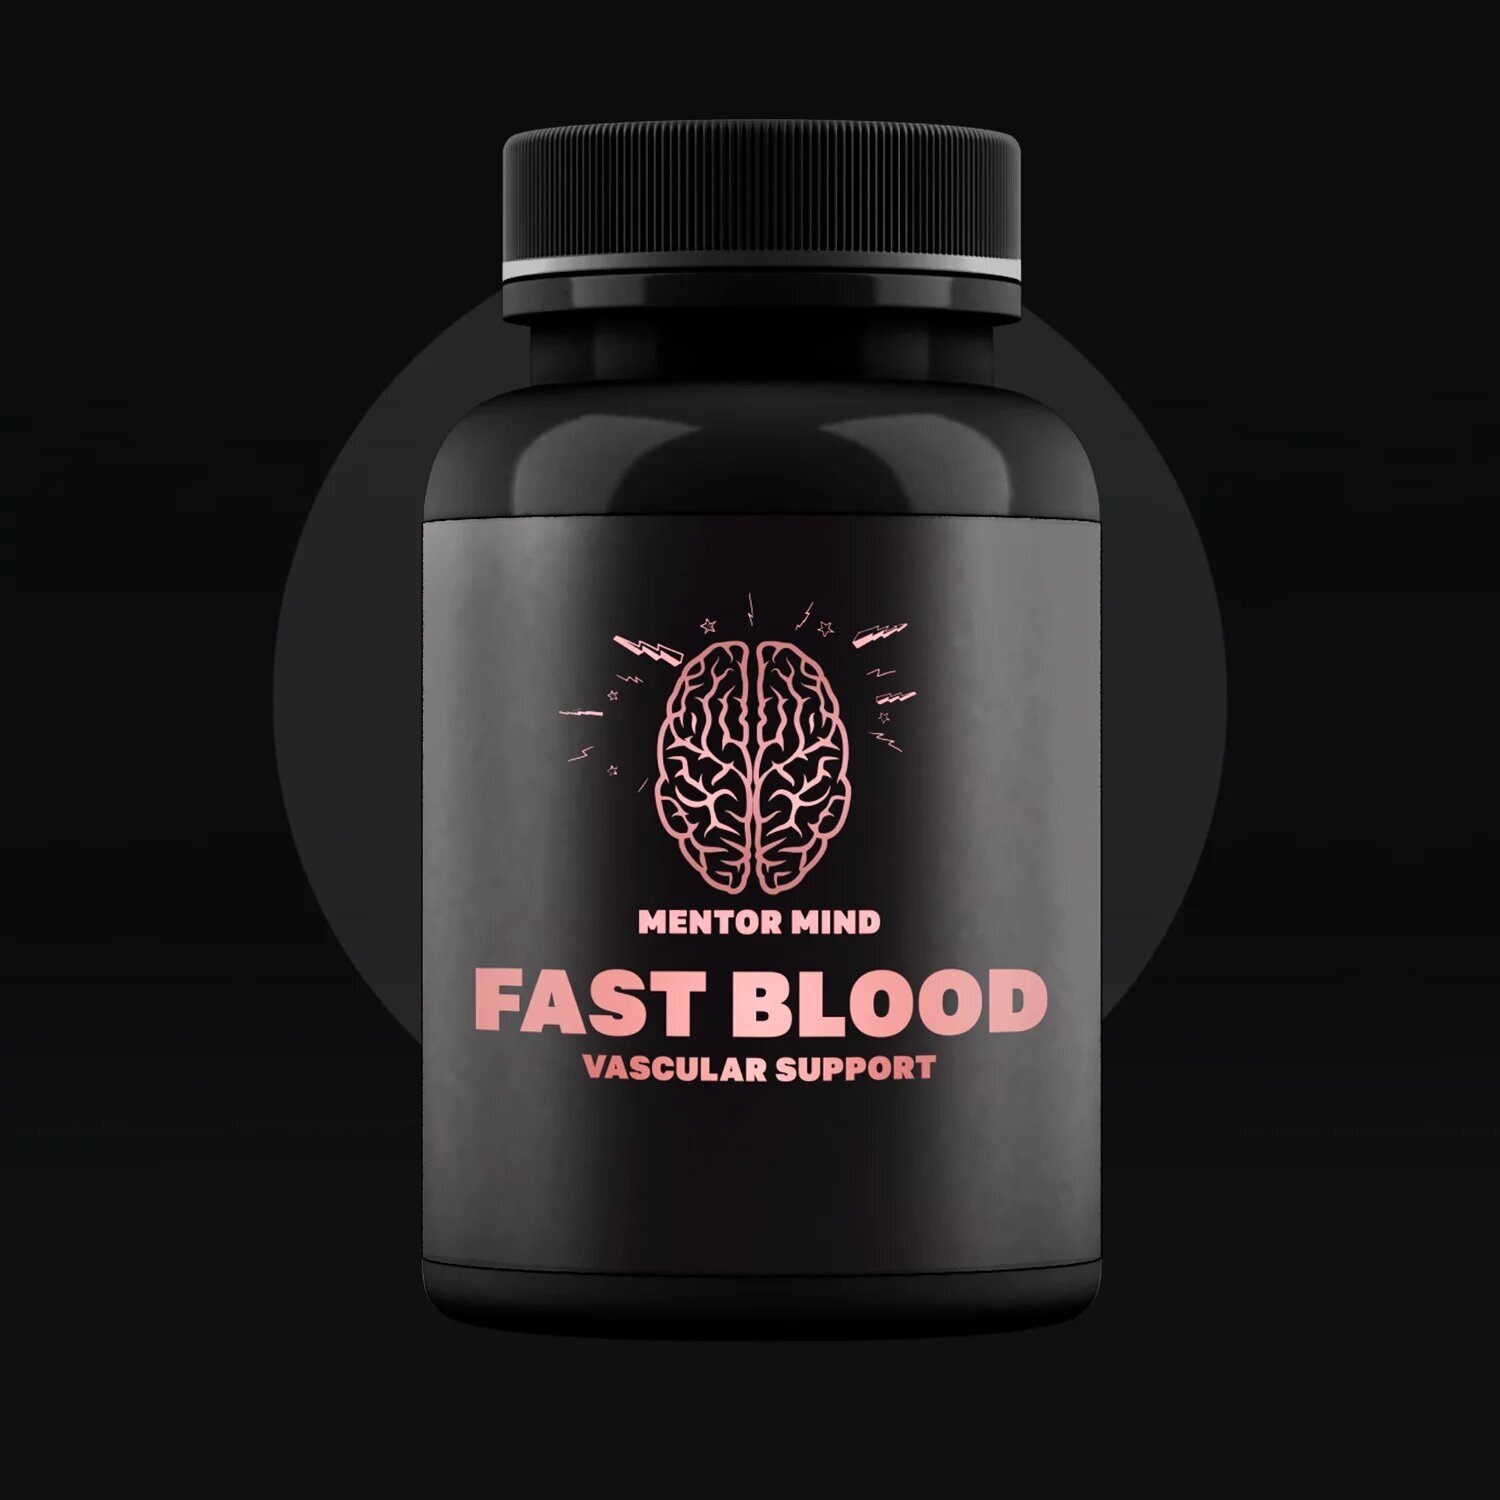 Fast Blood экстракт черного перца 5%